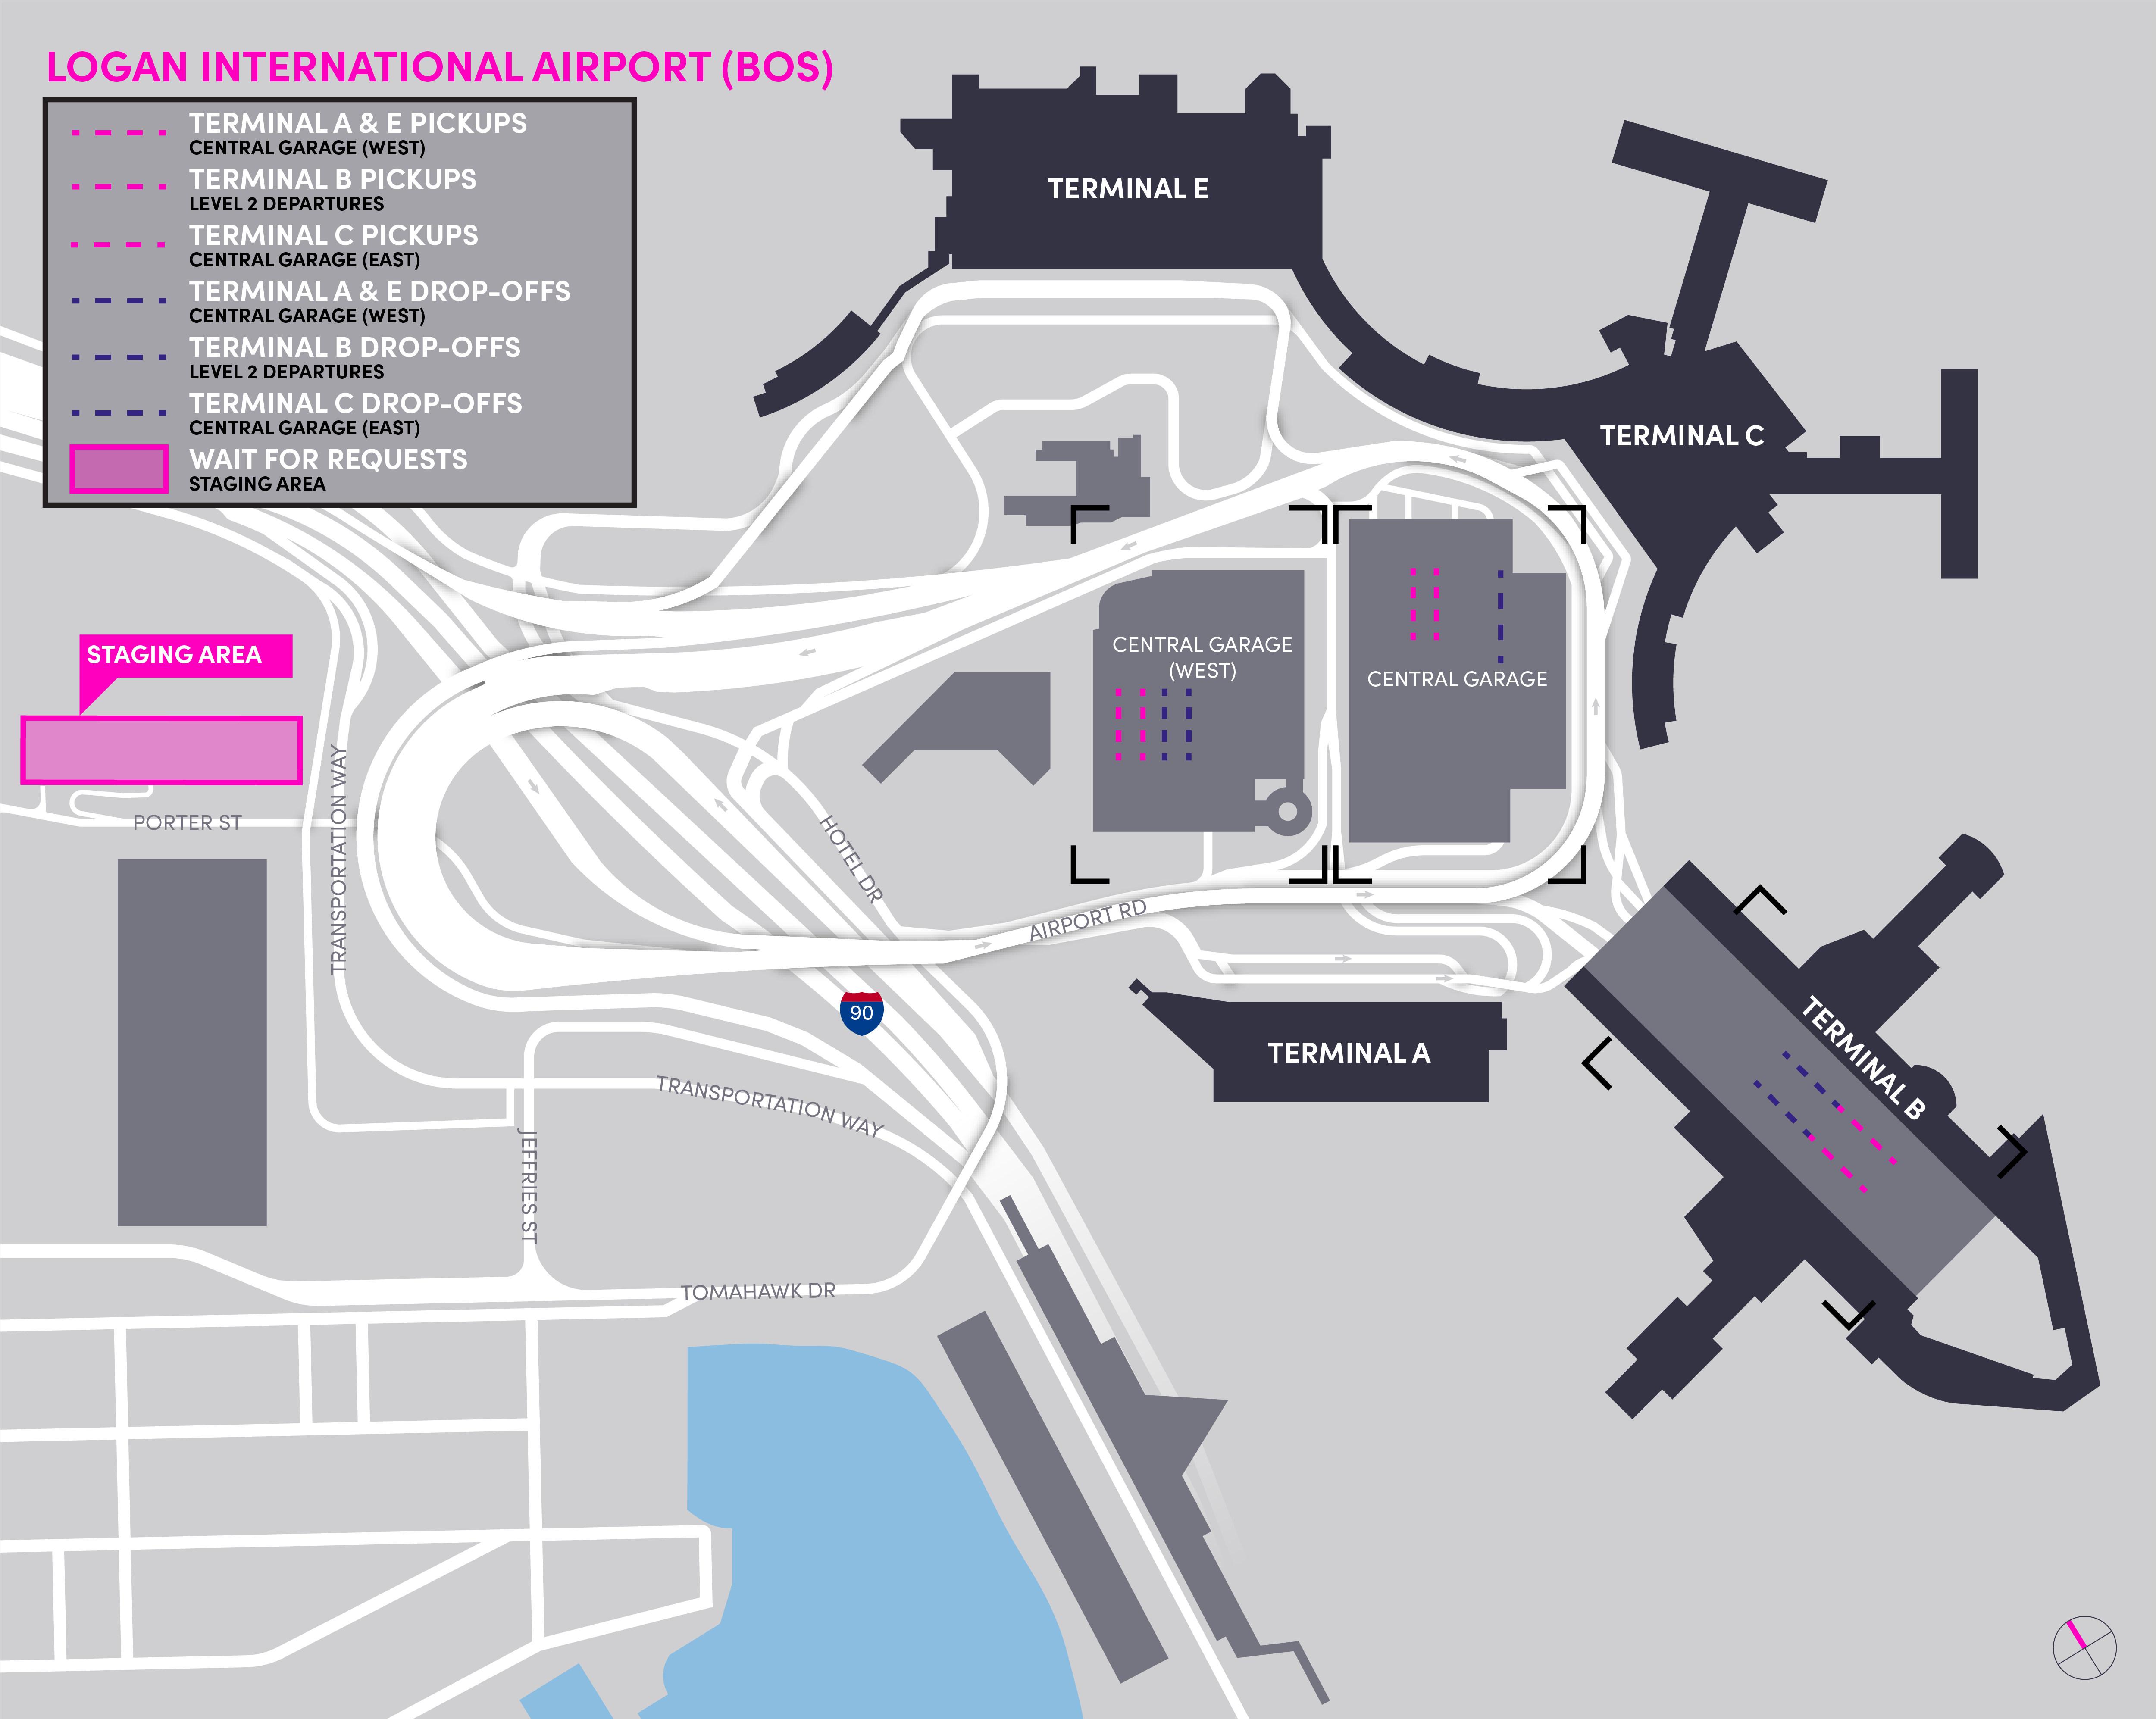 Mapa da área de espera no Boston Logan International Airport